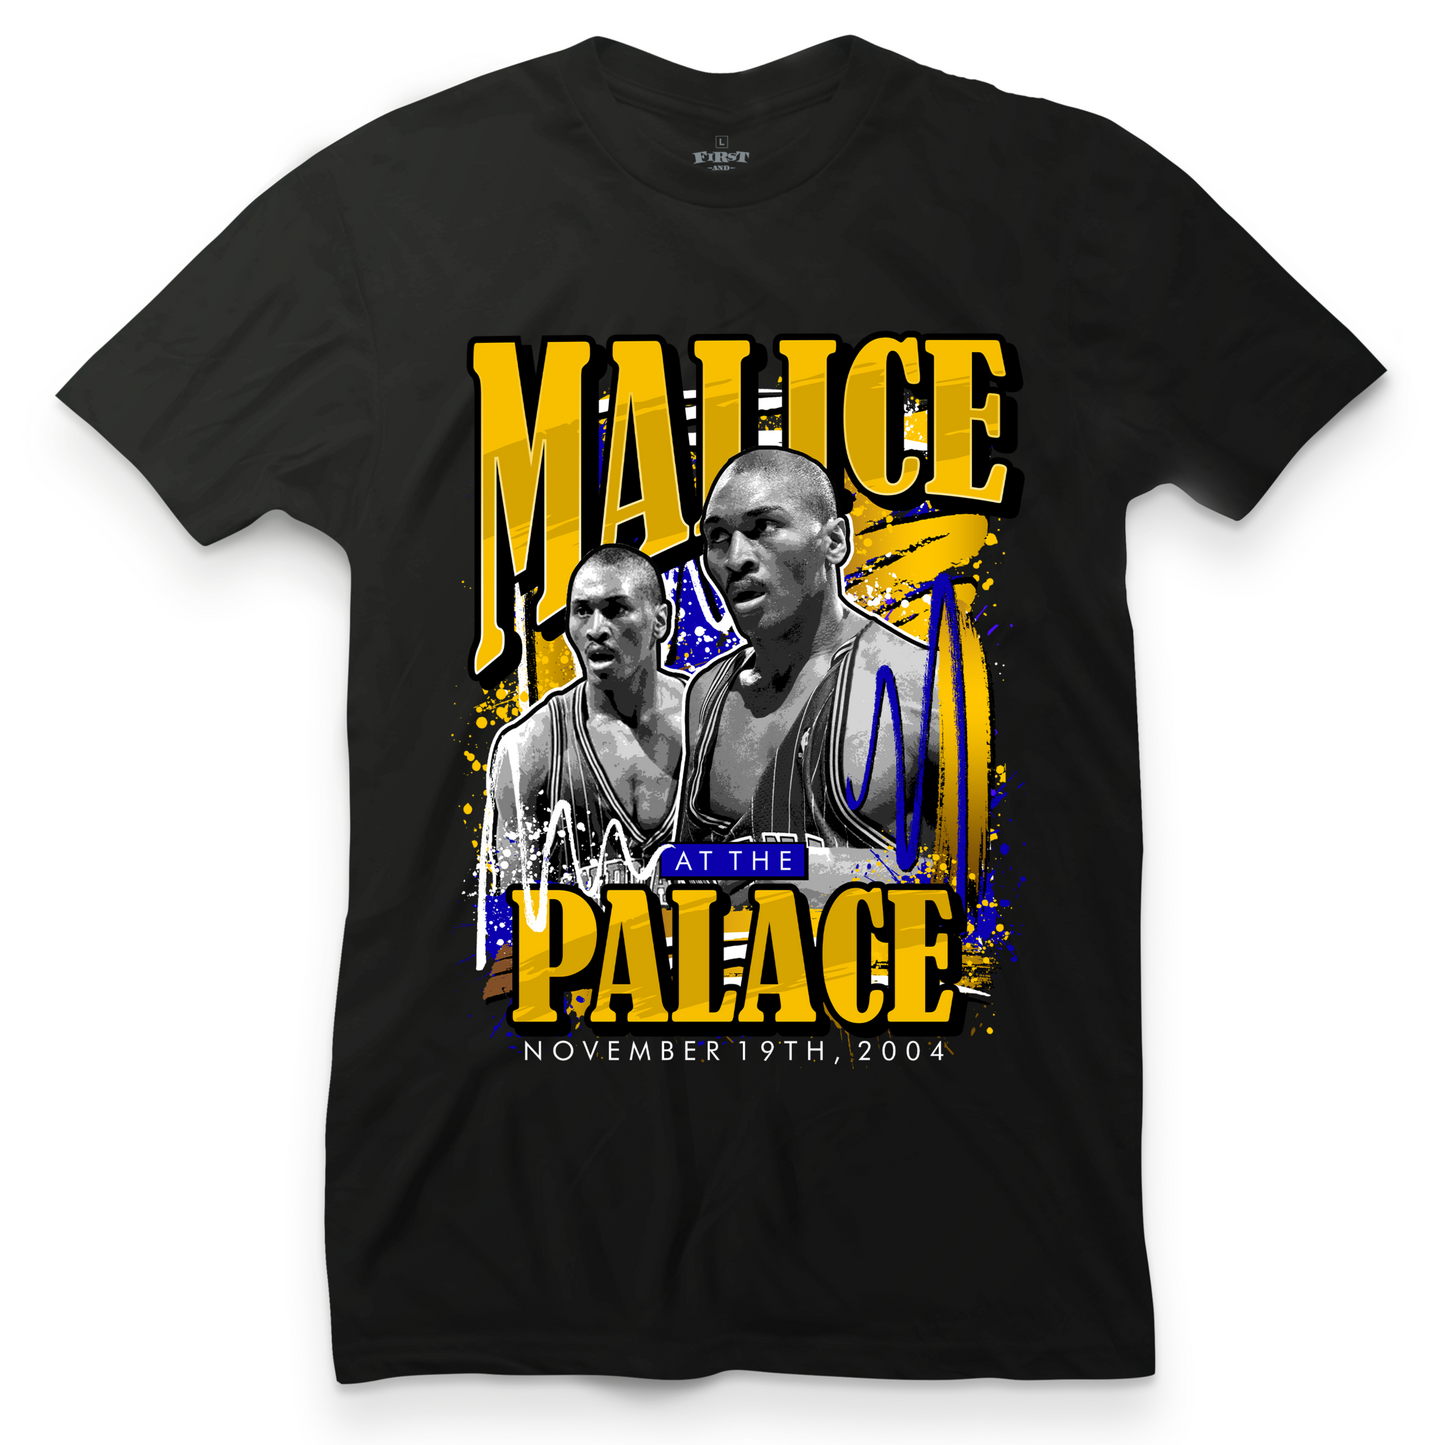 Malice at the palace t shirt